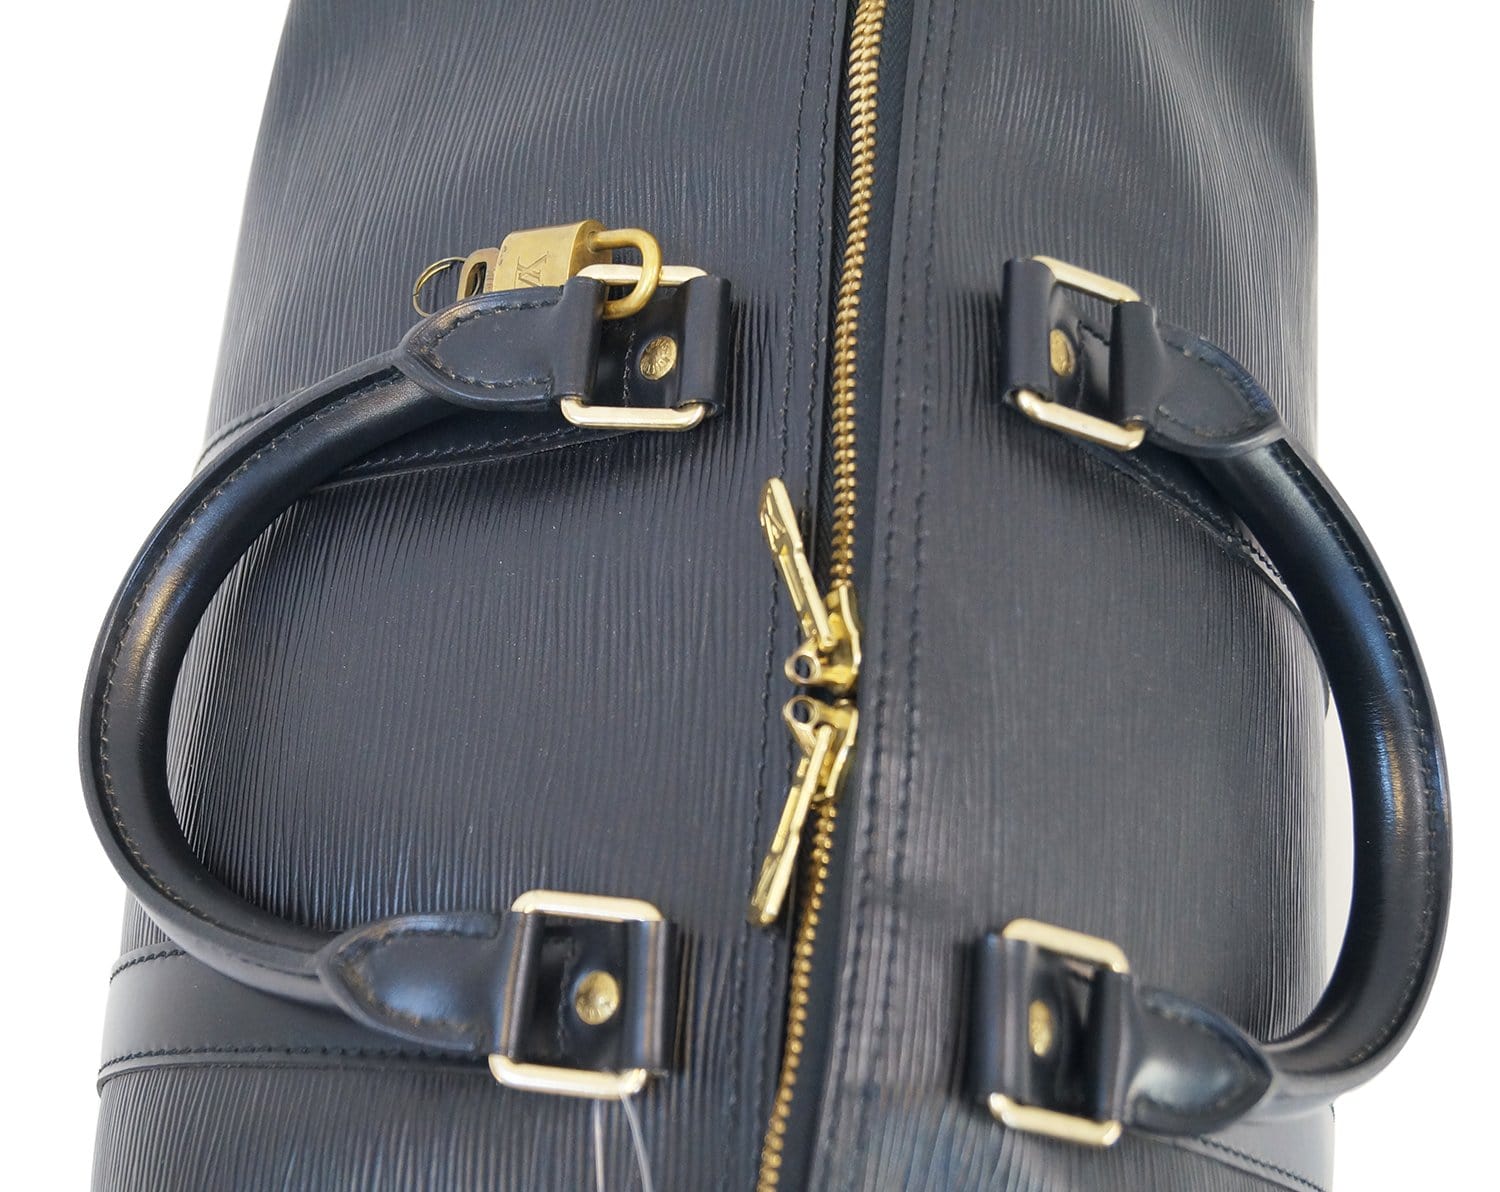 Louis Vuitton Keepall 45 EPI Leather Travel Bag Black